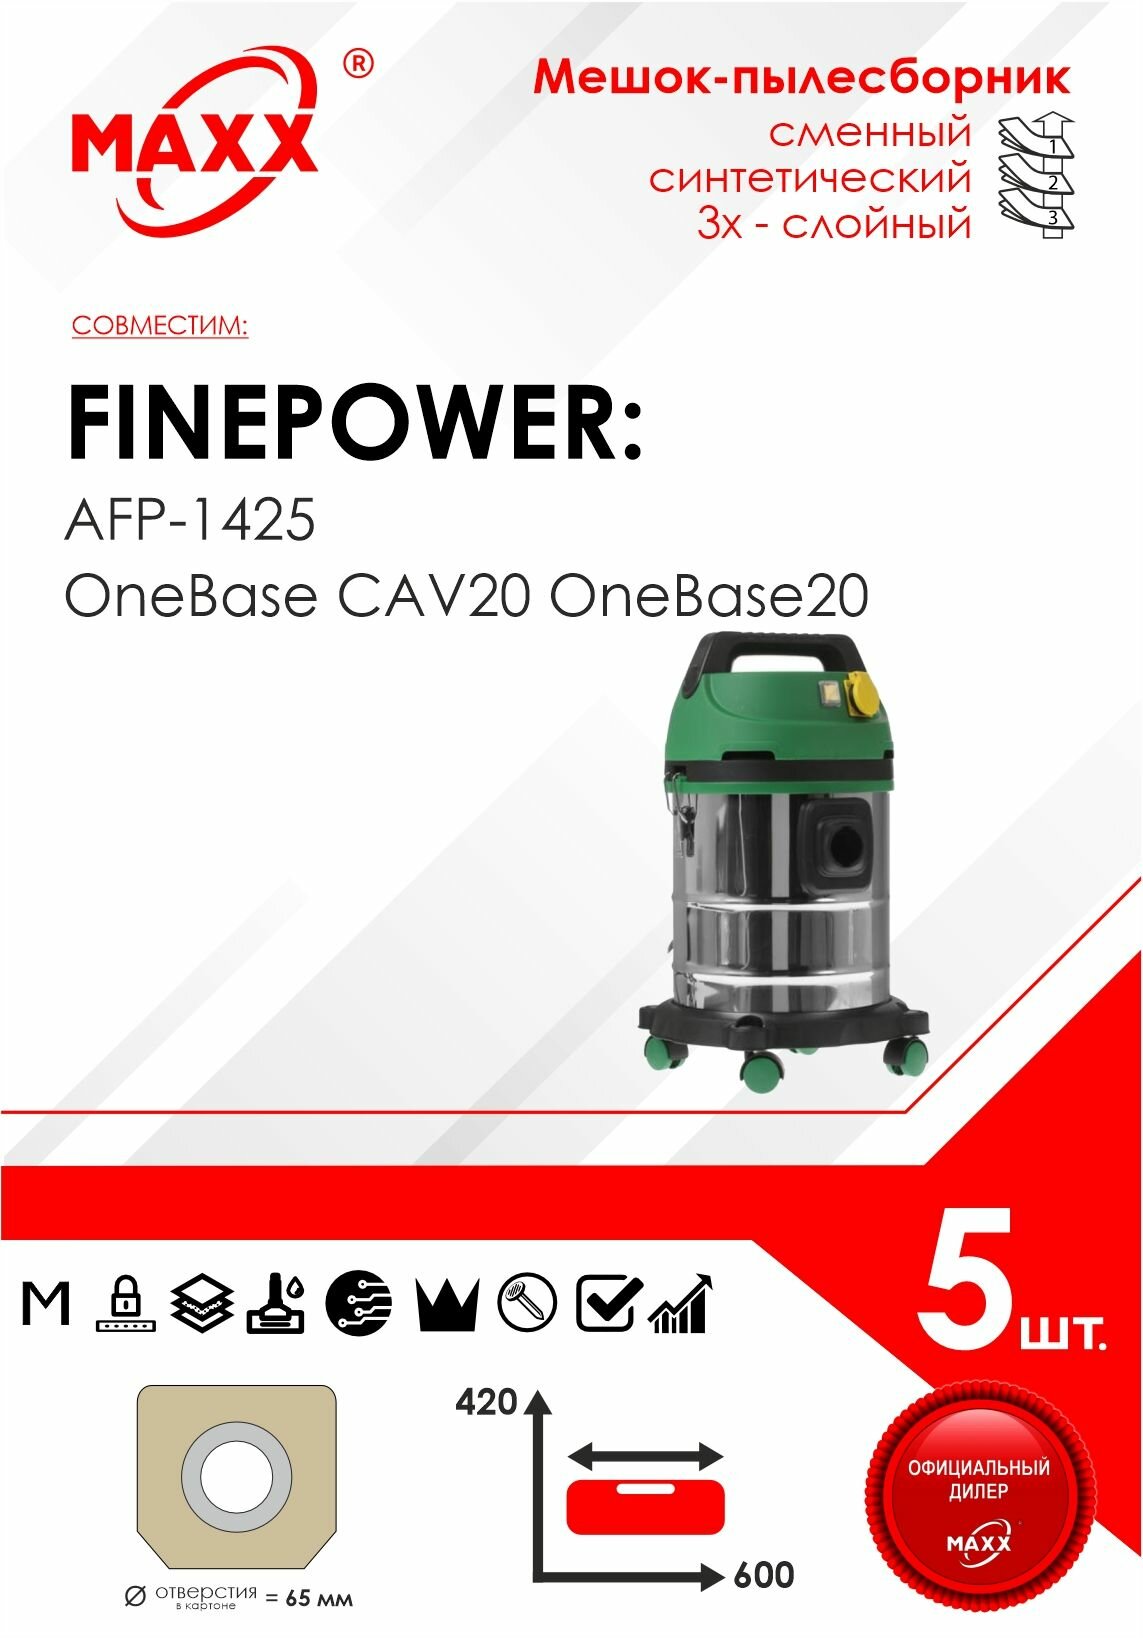 Мешок - пылесборник 5 шт. для пылесоса FinePower AFP-1425, FinePower OneBase CAV20 OneBase20